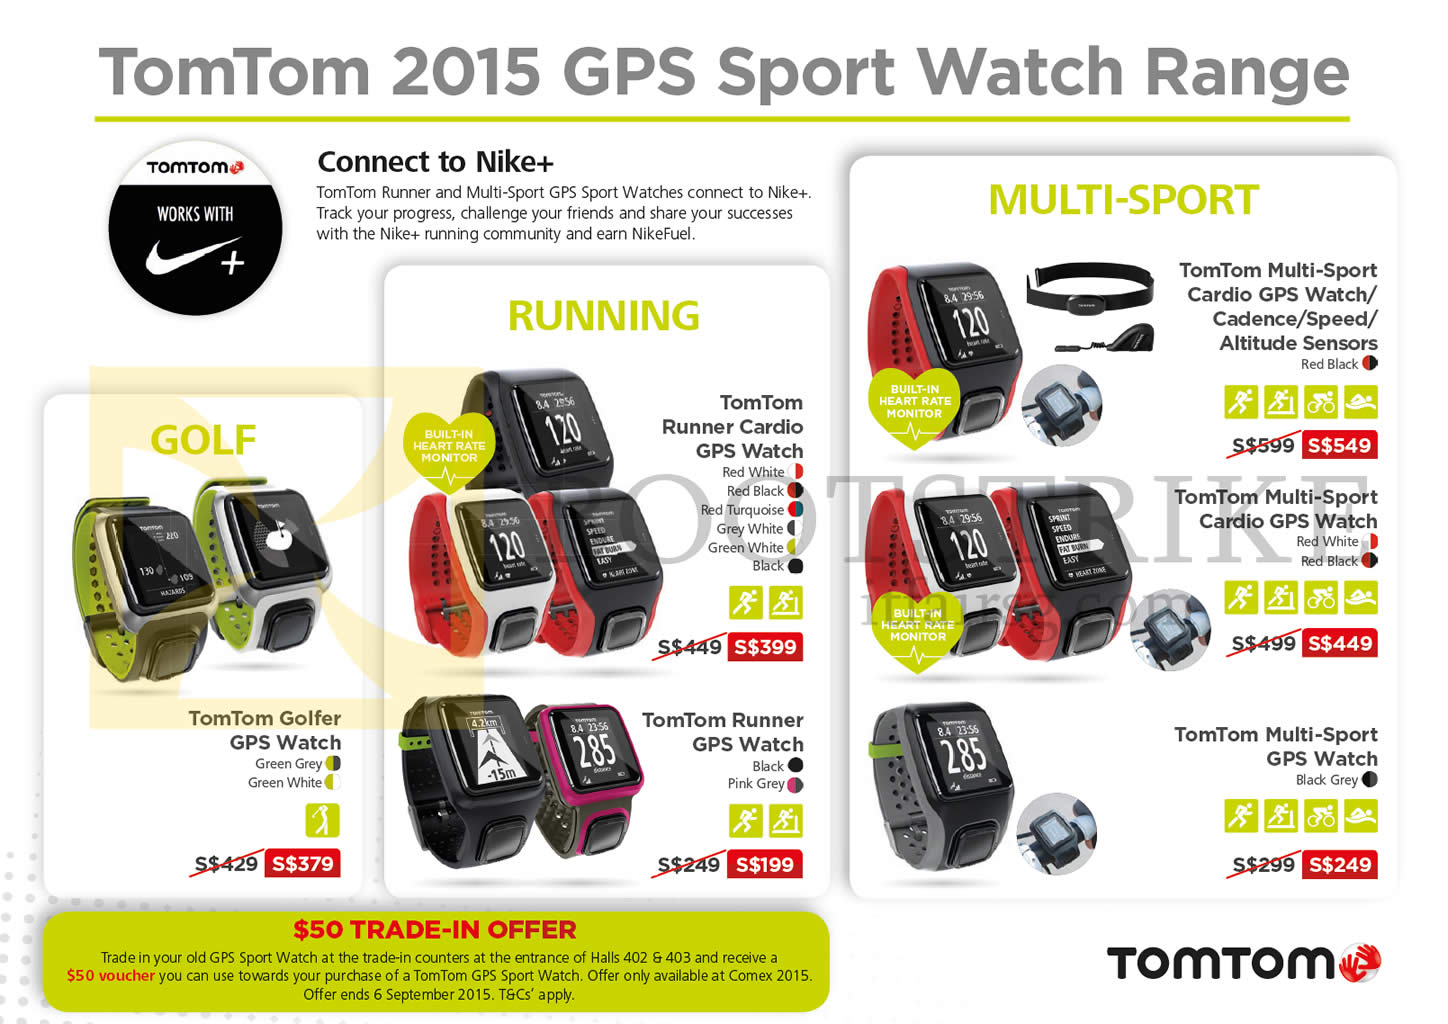 COMEX 2015 price list image brochure of TomTom GPS Sport Watch Range Golfer, Runner, Runner Cardio, Multi-Sport Cardio